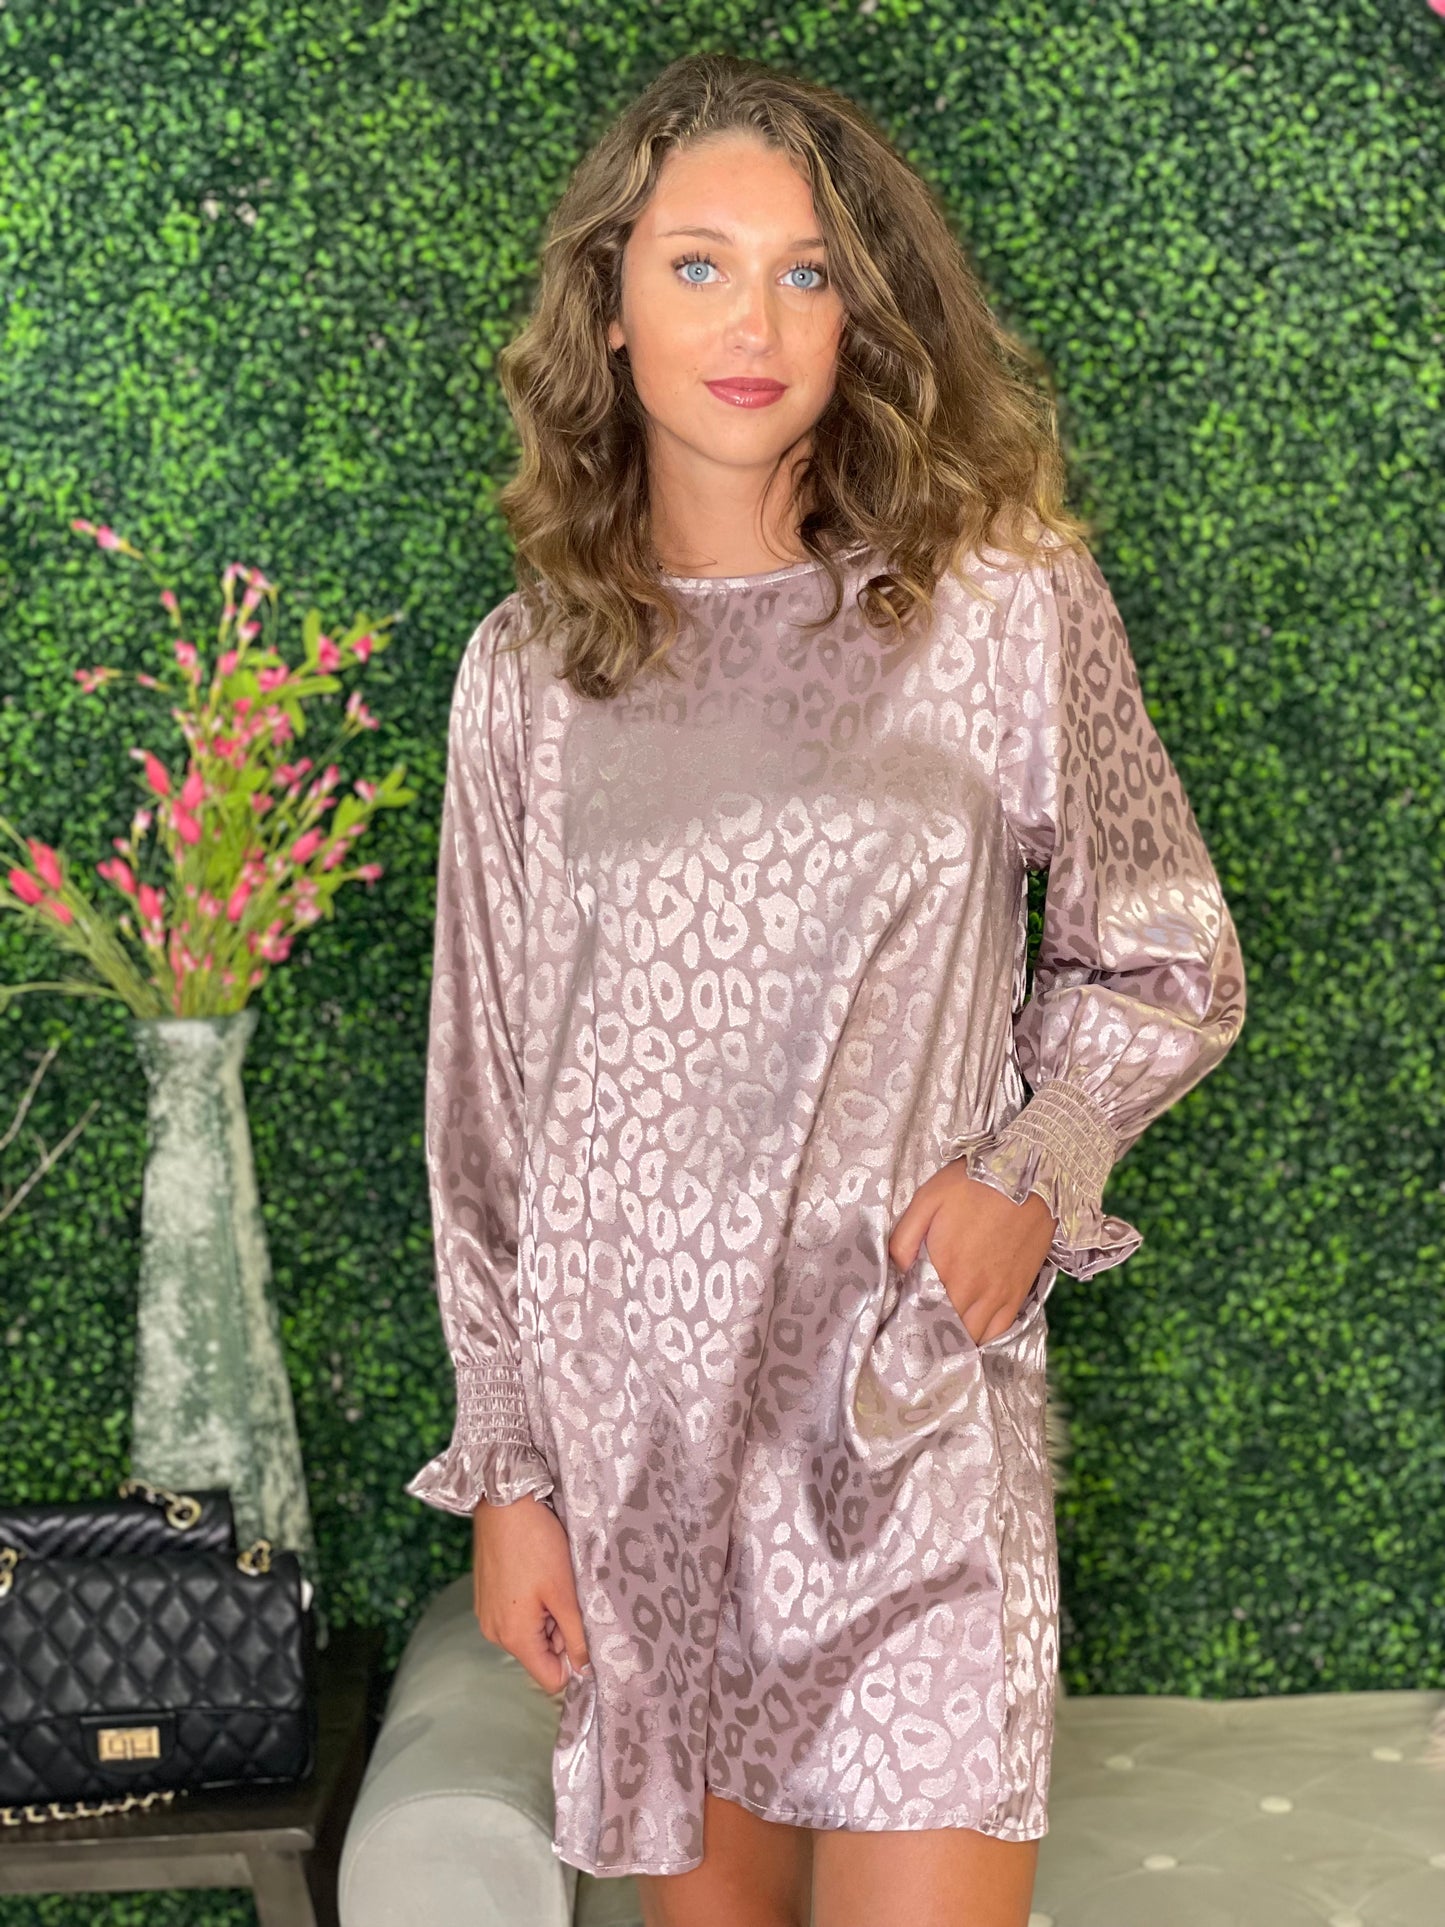 Chelsea Cheetah Muave Dress